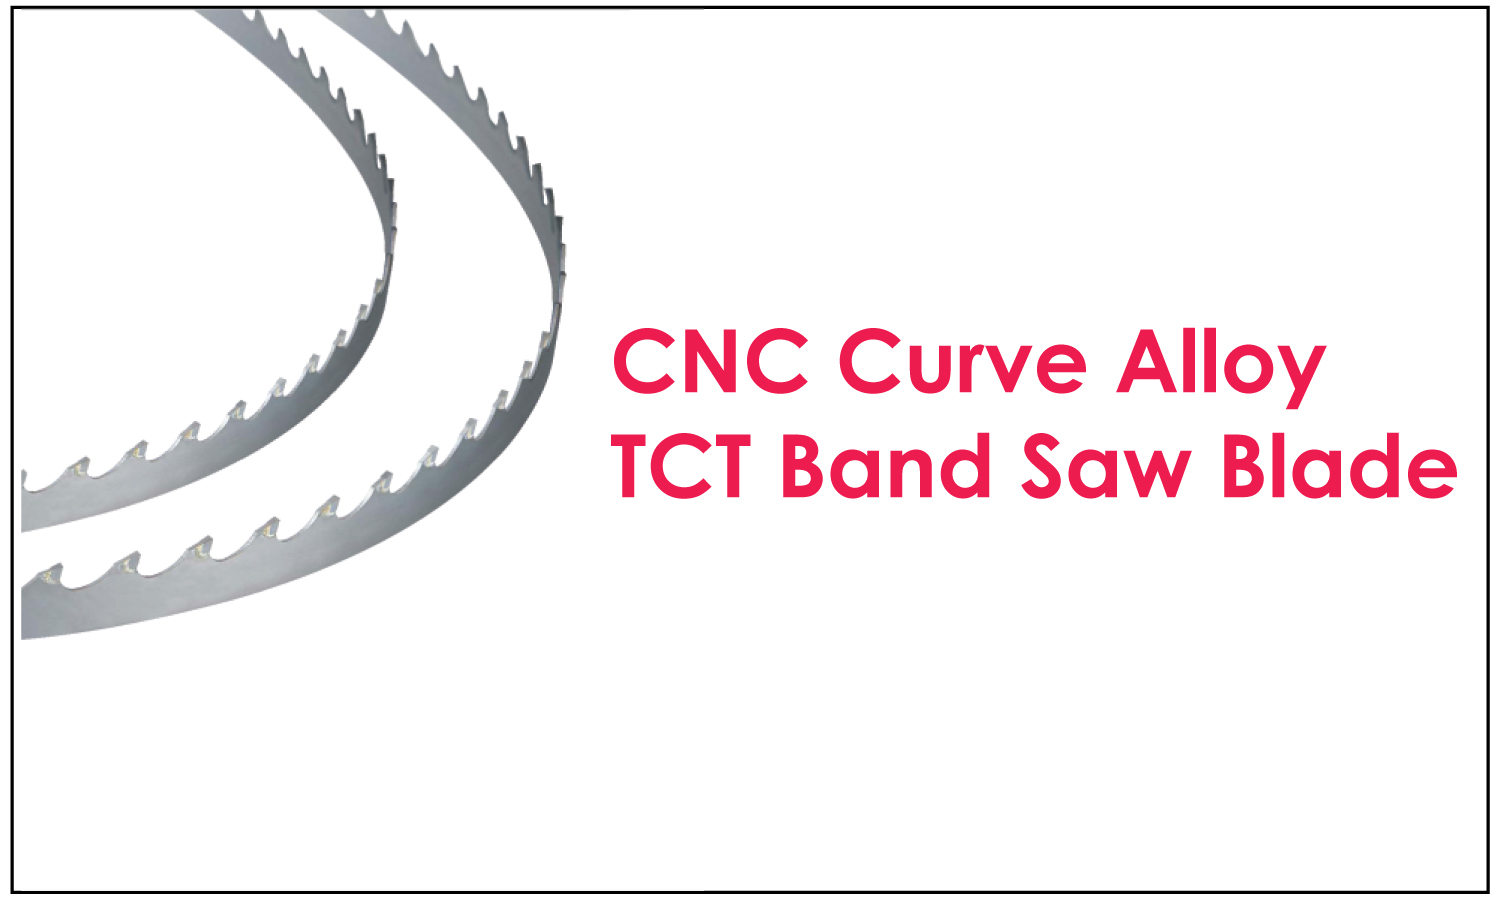 CNC Curve Alloy TCT Band Saw Blade